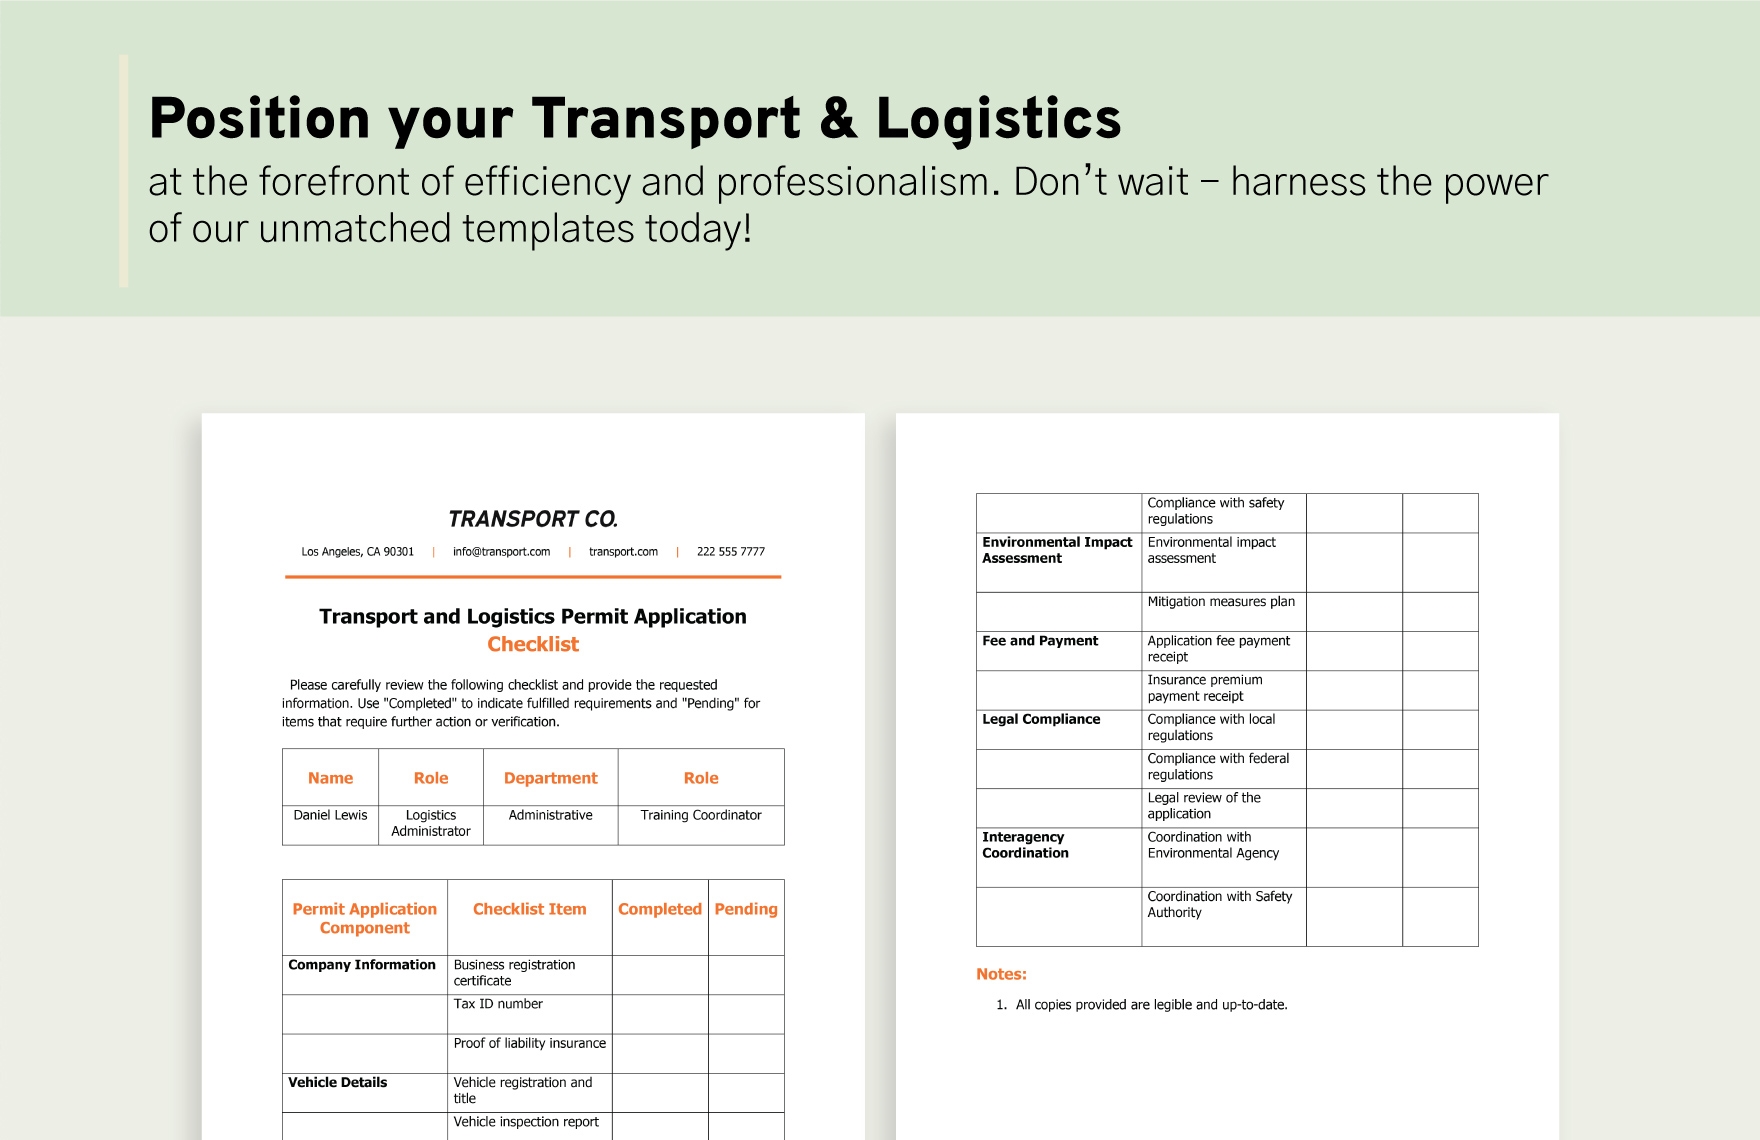 Transport and Logistics Permit Application Checklist Template